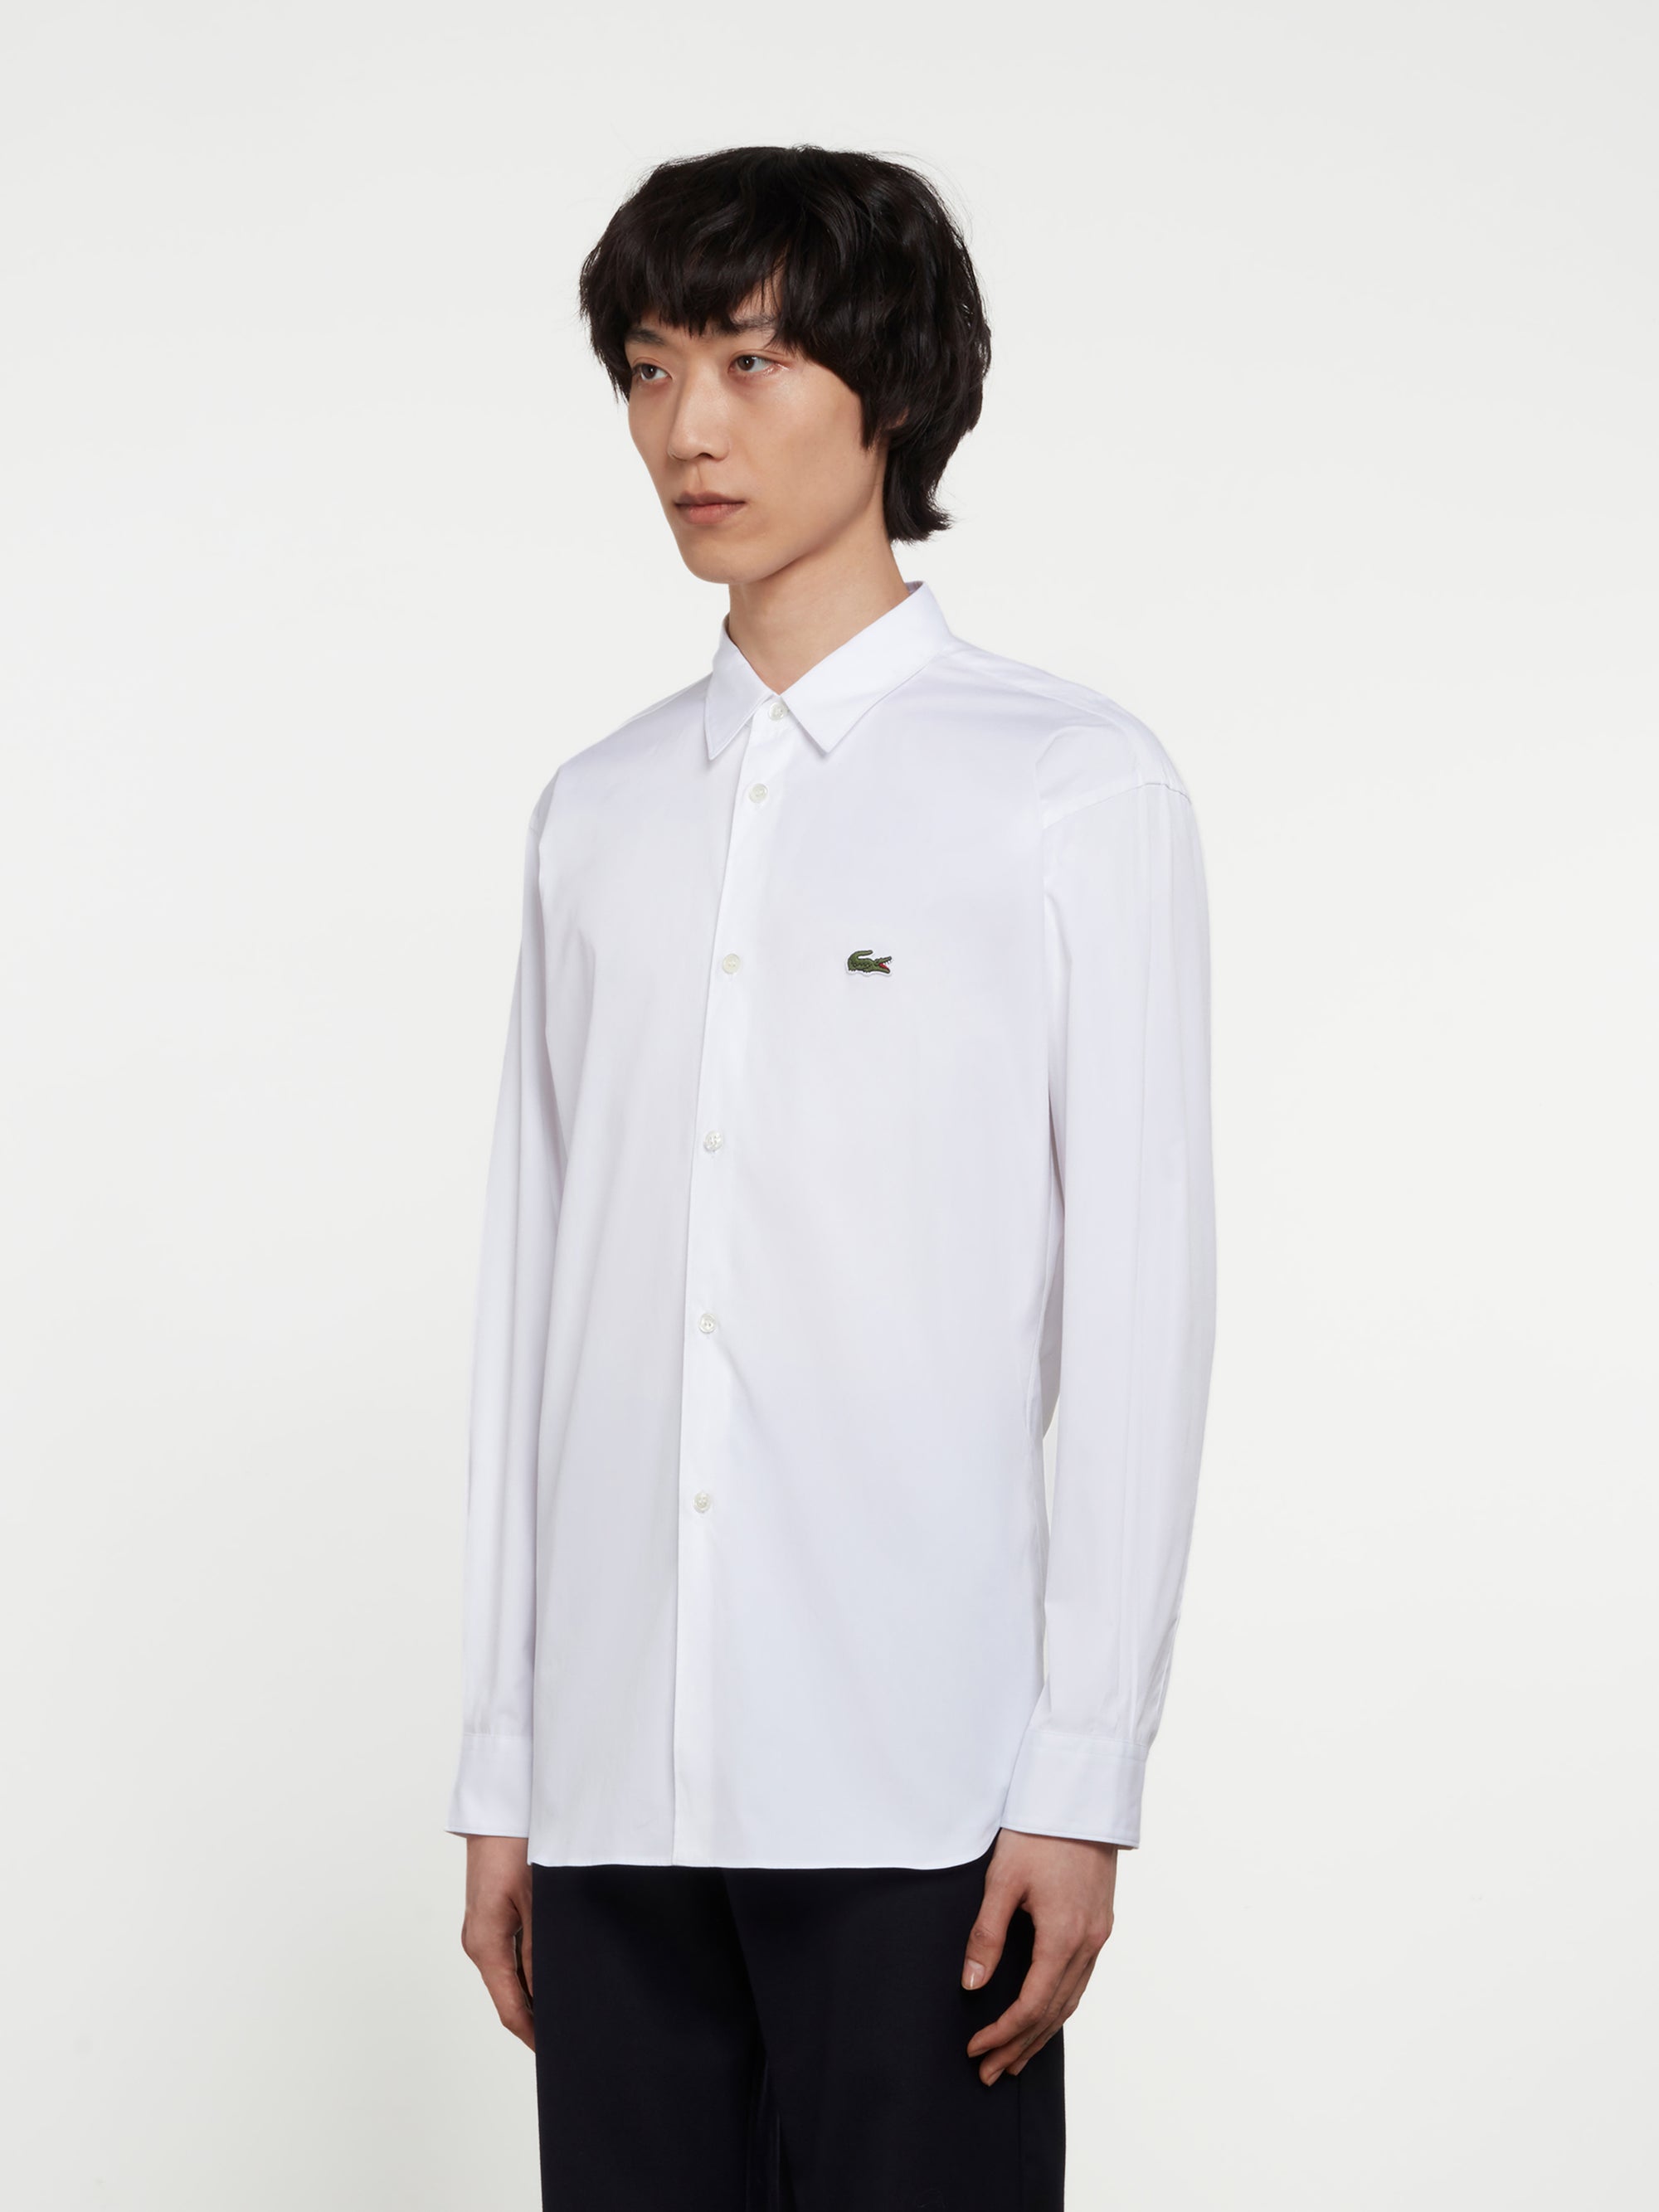 CDG Shirt - Lacoste Men’s Cotton Poplin Shirt - (White) view 2